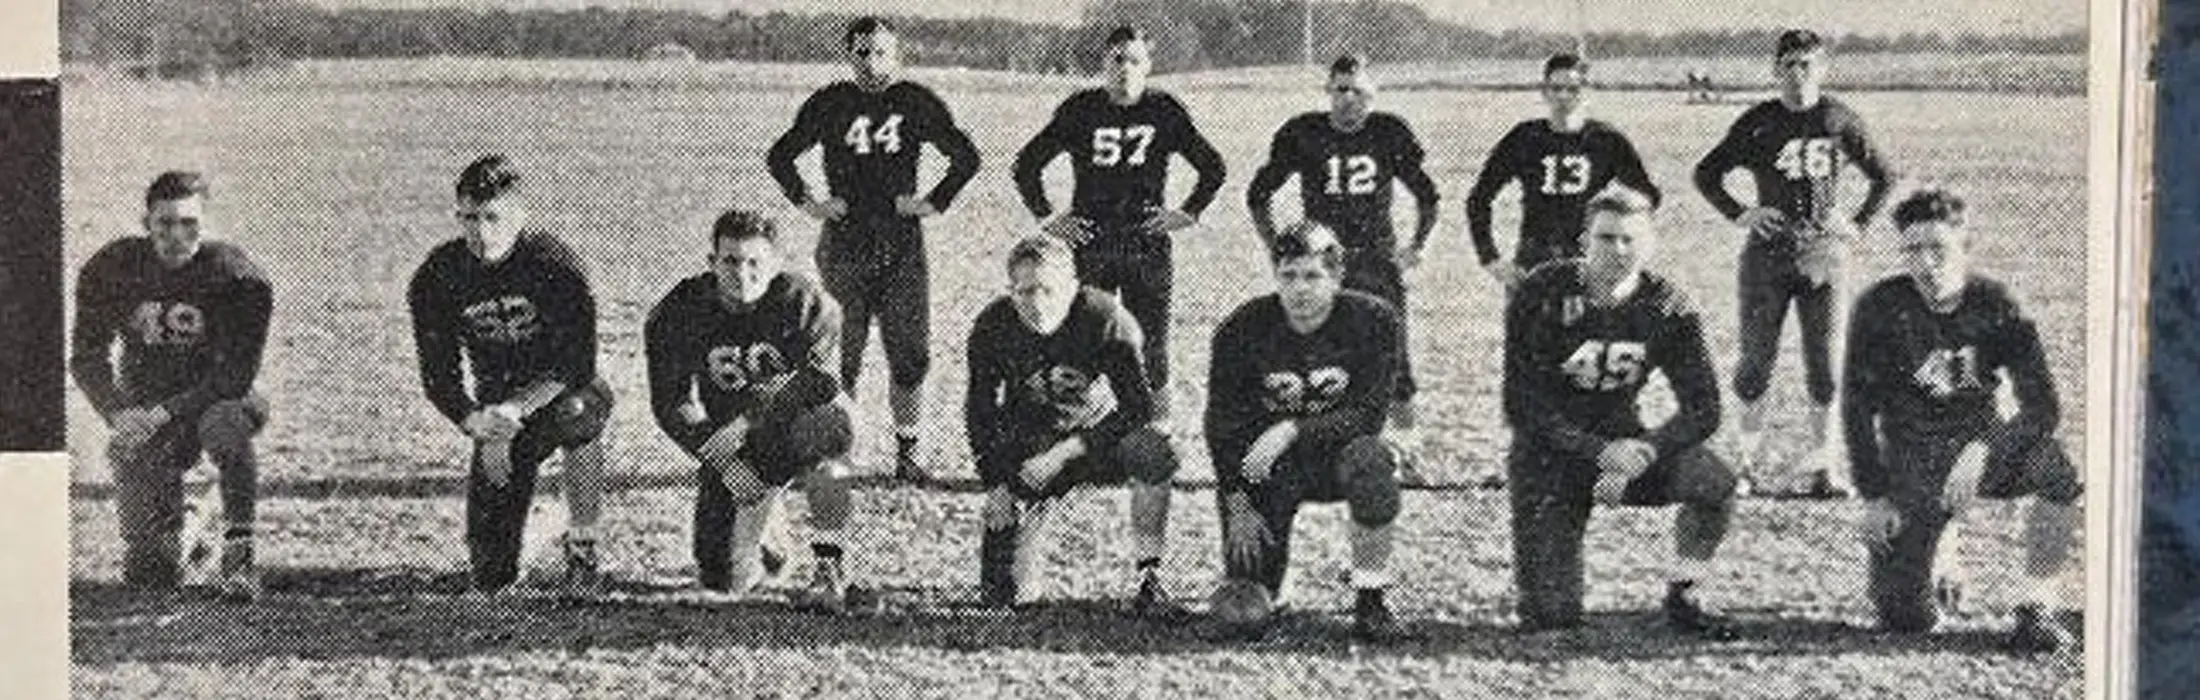 1946 Malvern Prep Football Team